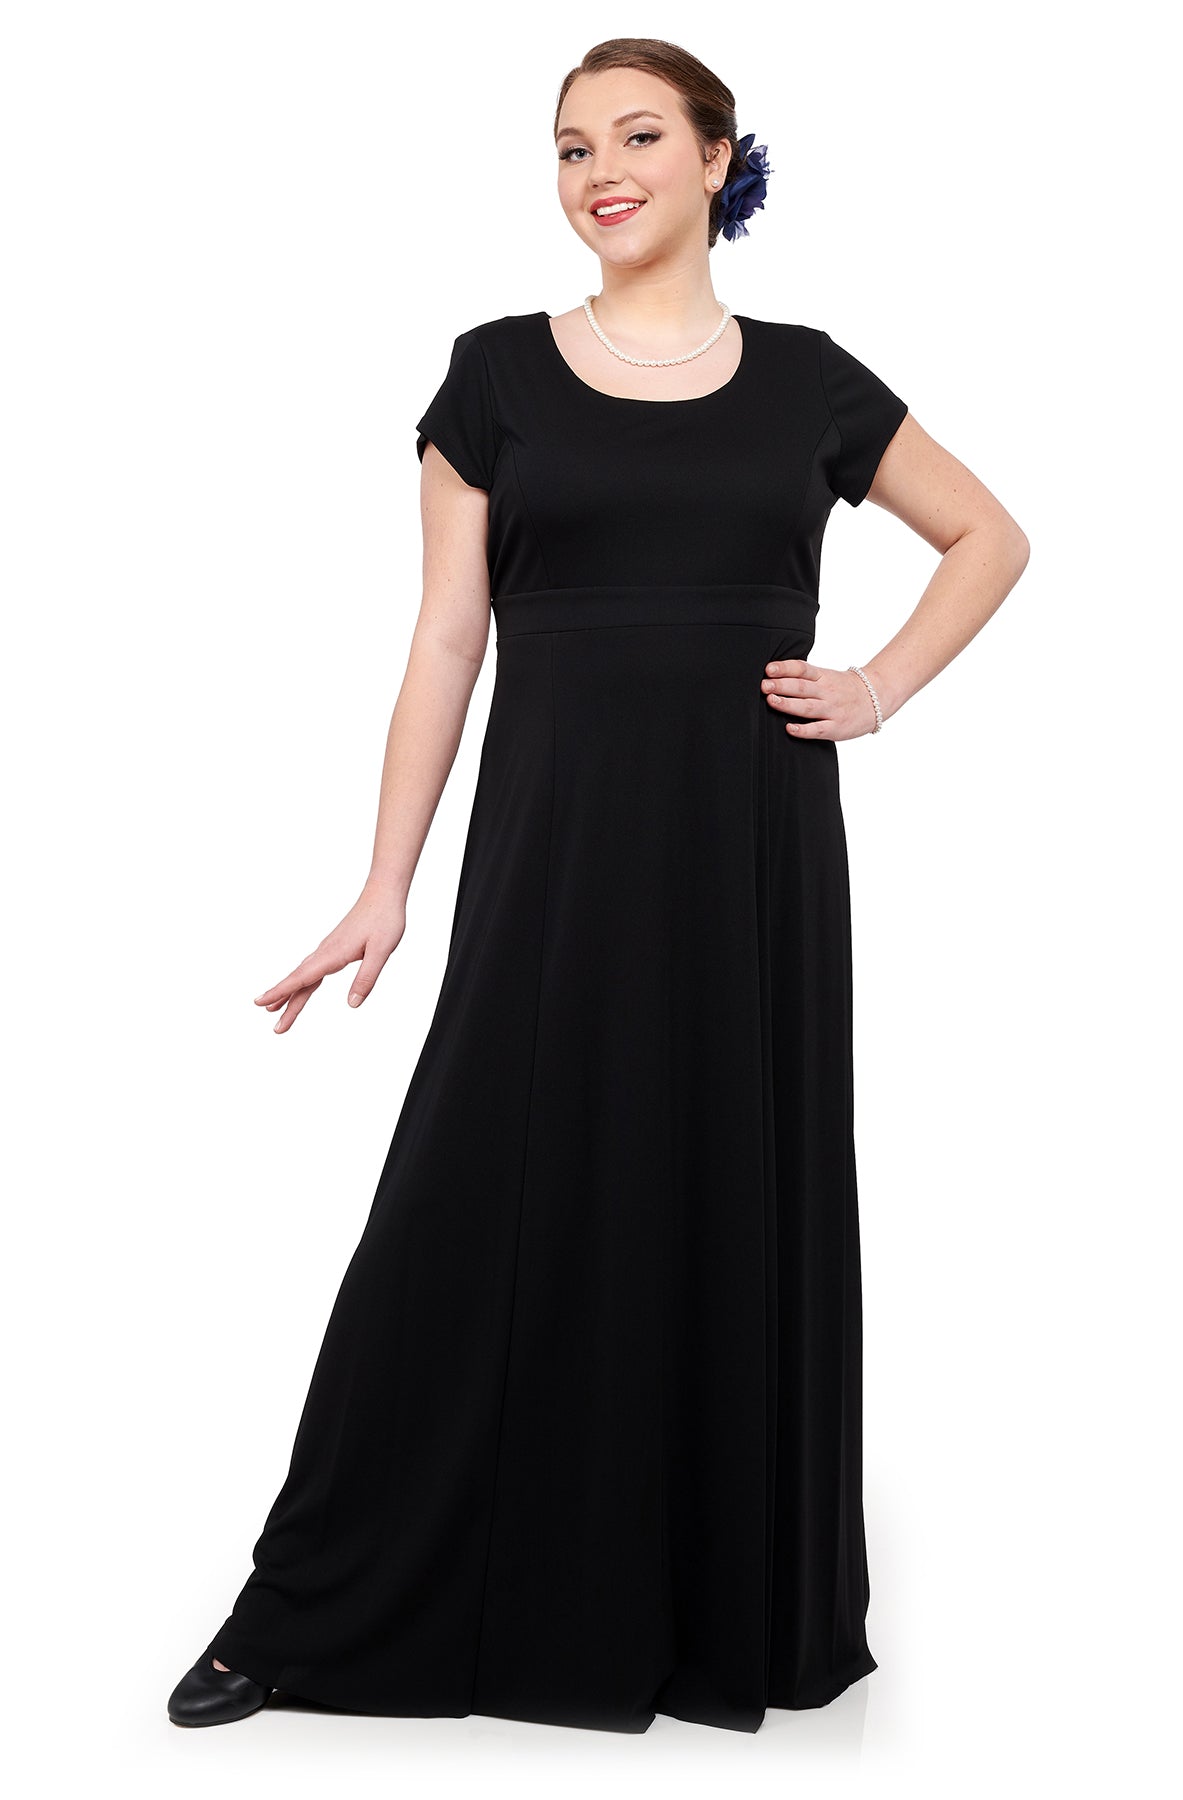 ANGELINA (Style #115) - Scoop Neck, Short Sleeve Dress